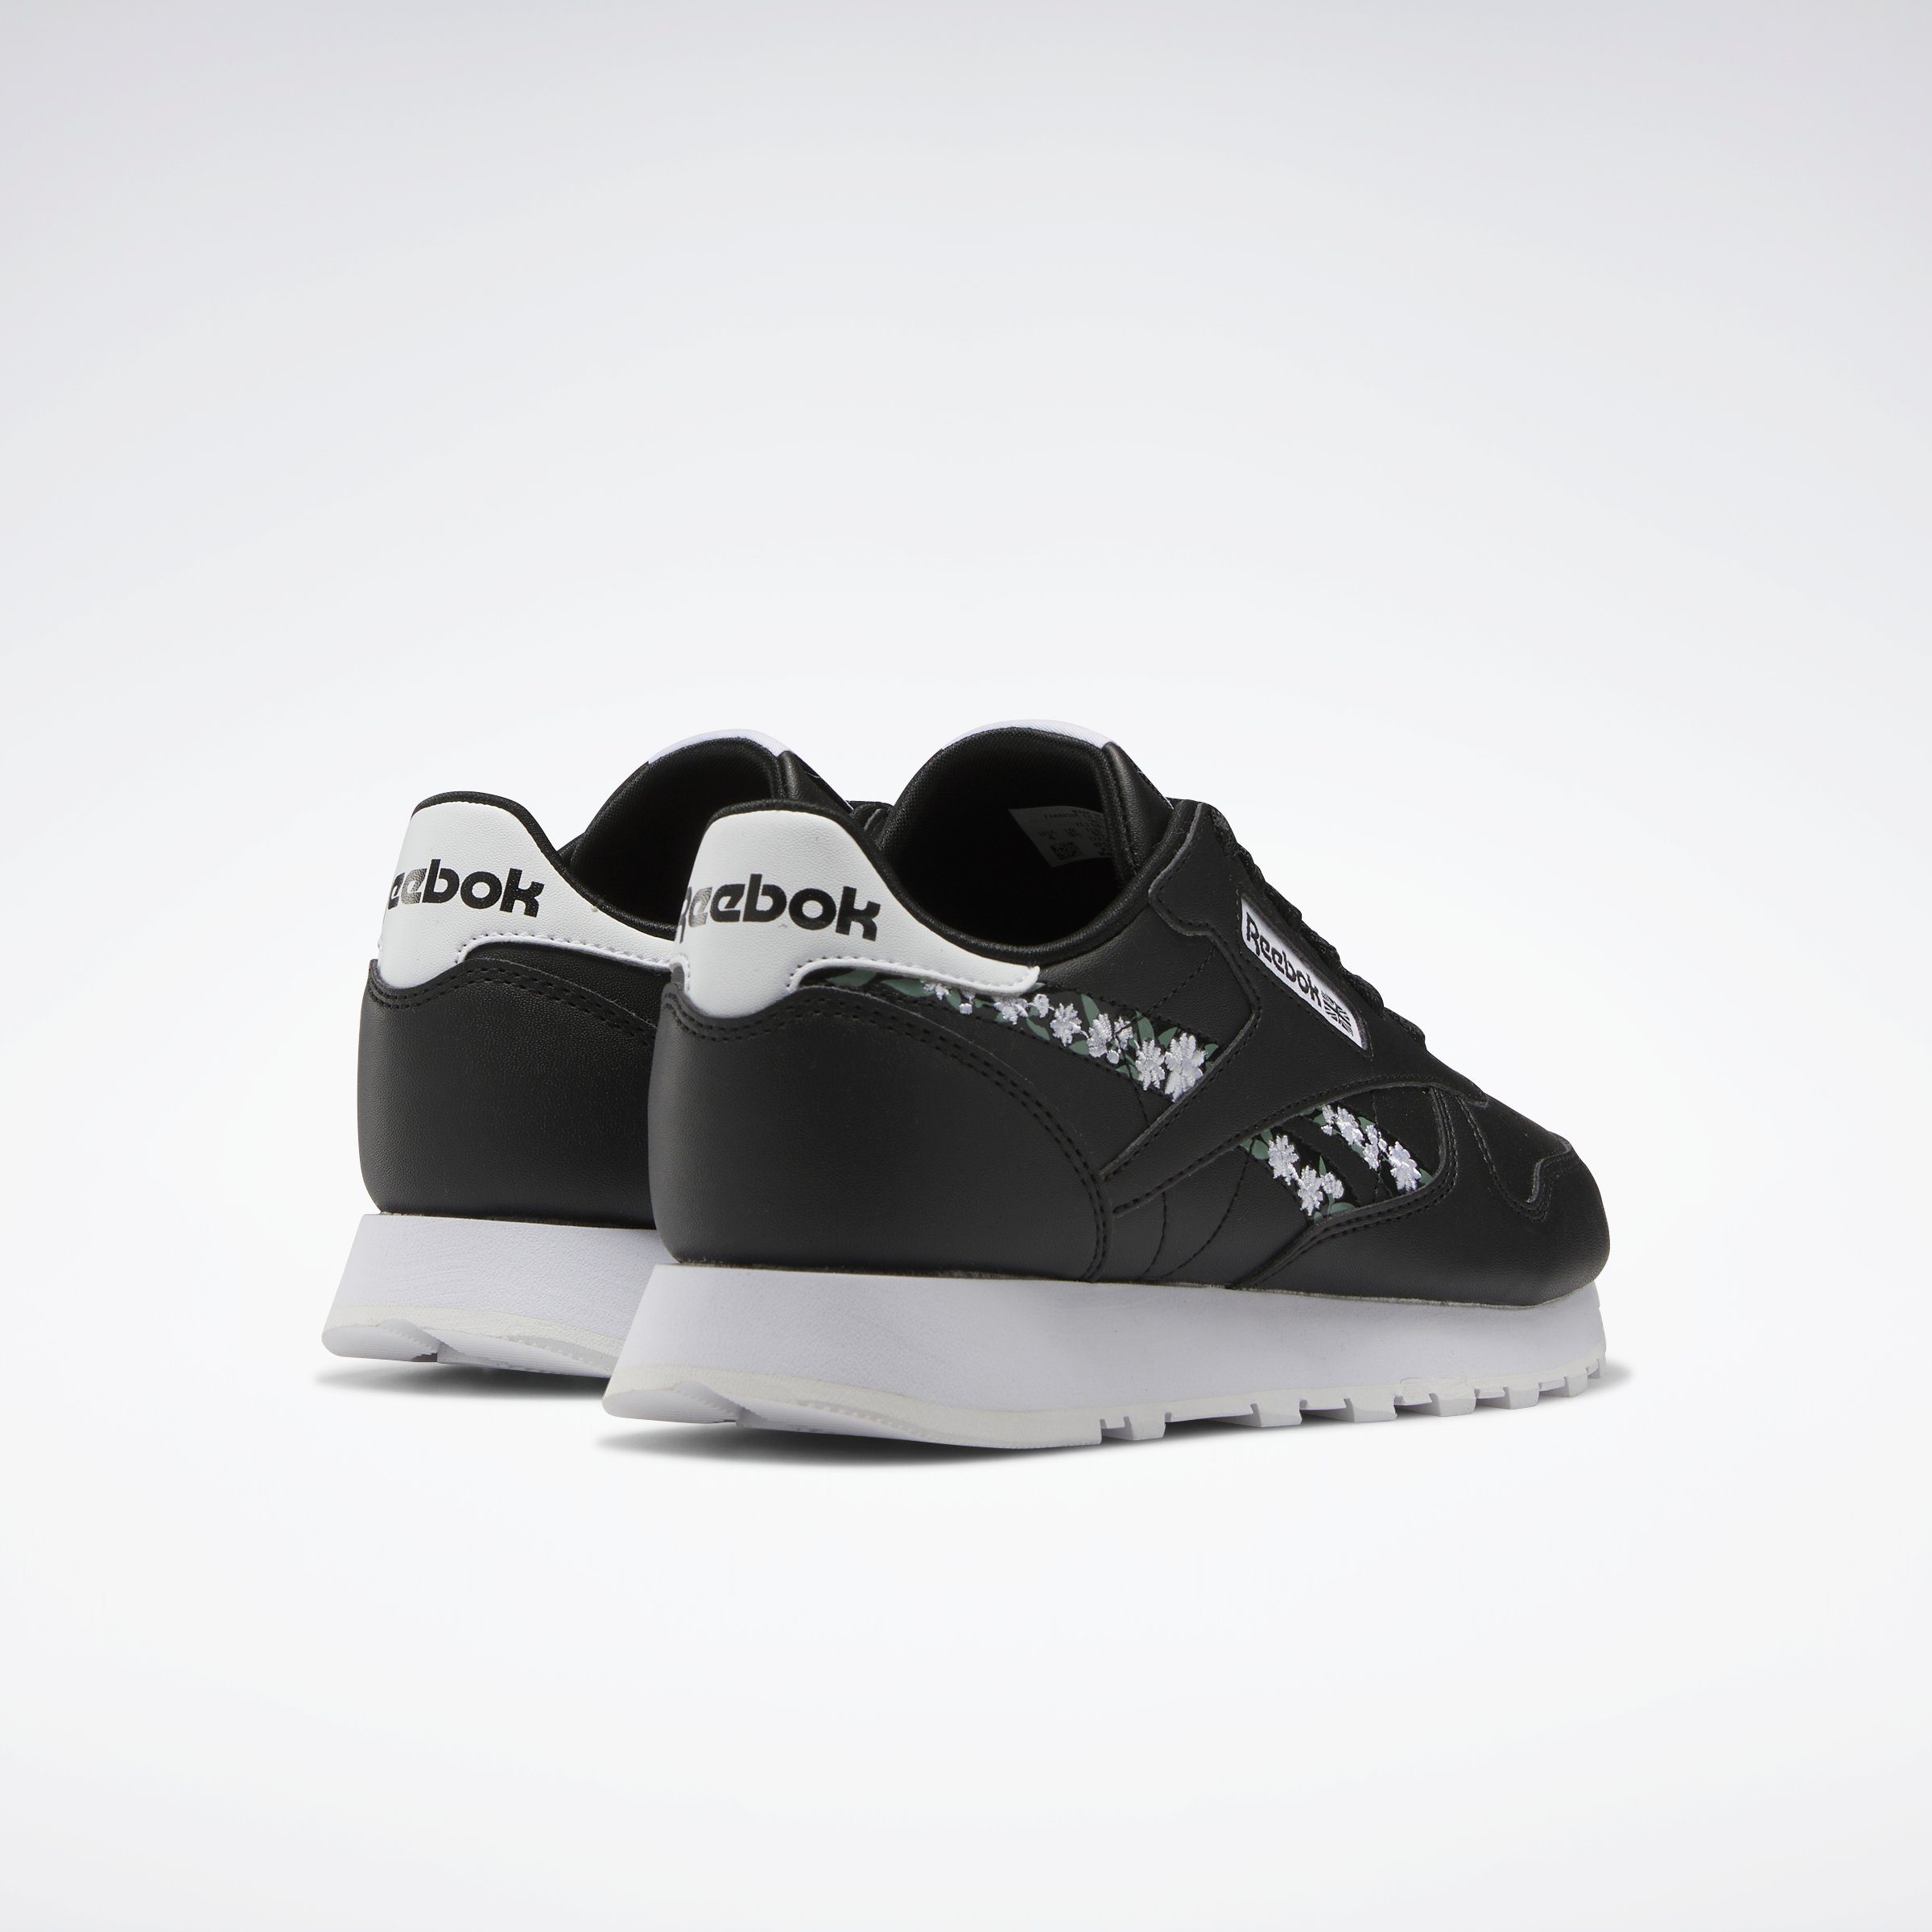 Reebok LEATHER CLASSIC Sneaker Classic schwarz